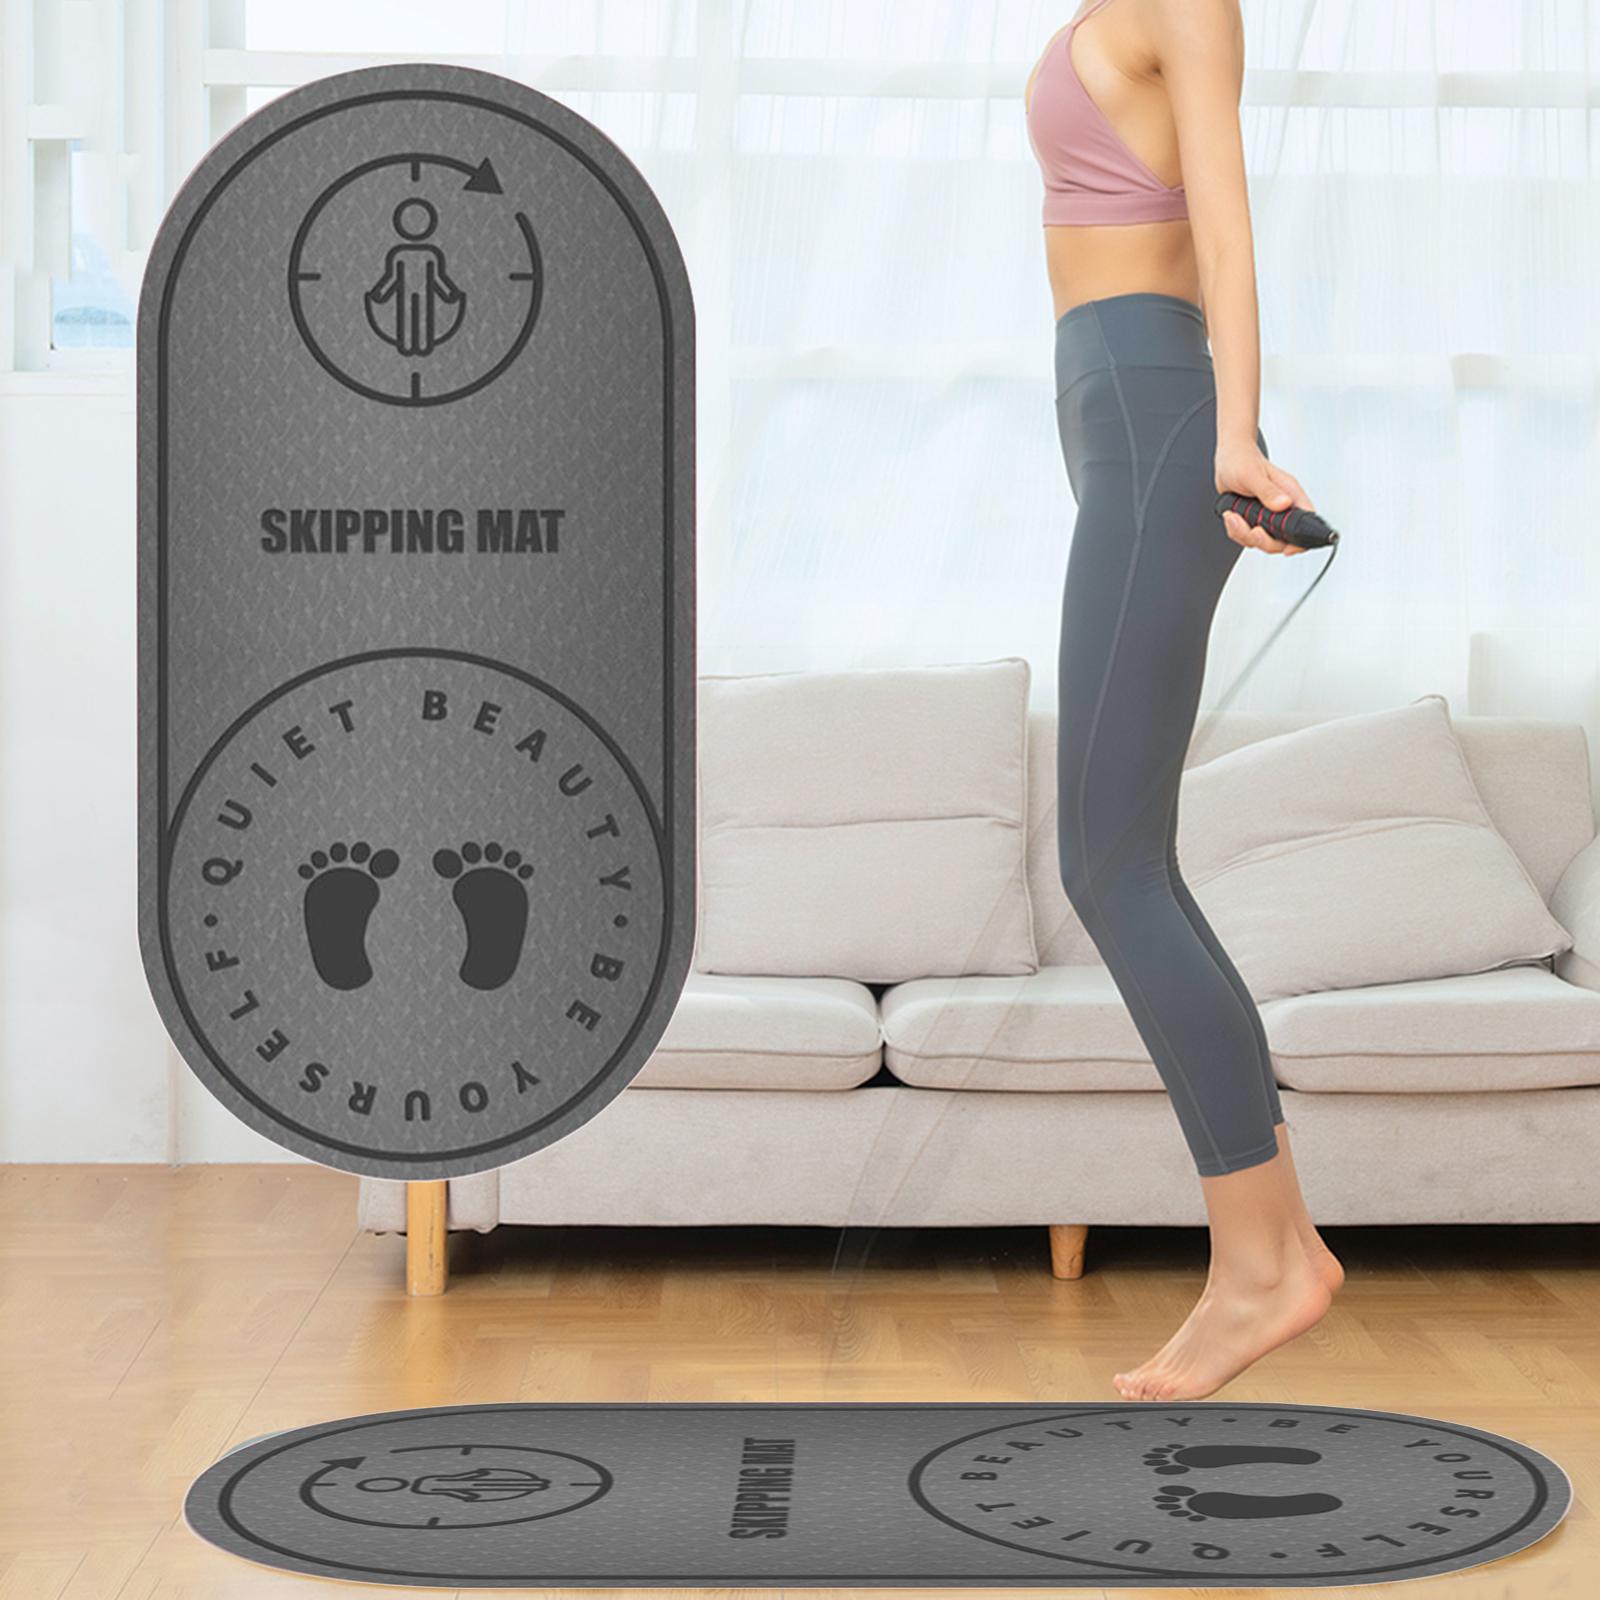 Exercise Skipping Mat High Density Anti Slip Cushion Yoga Mat Buffer Pad Gray Thick 6mm